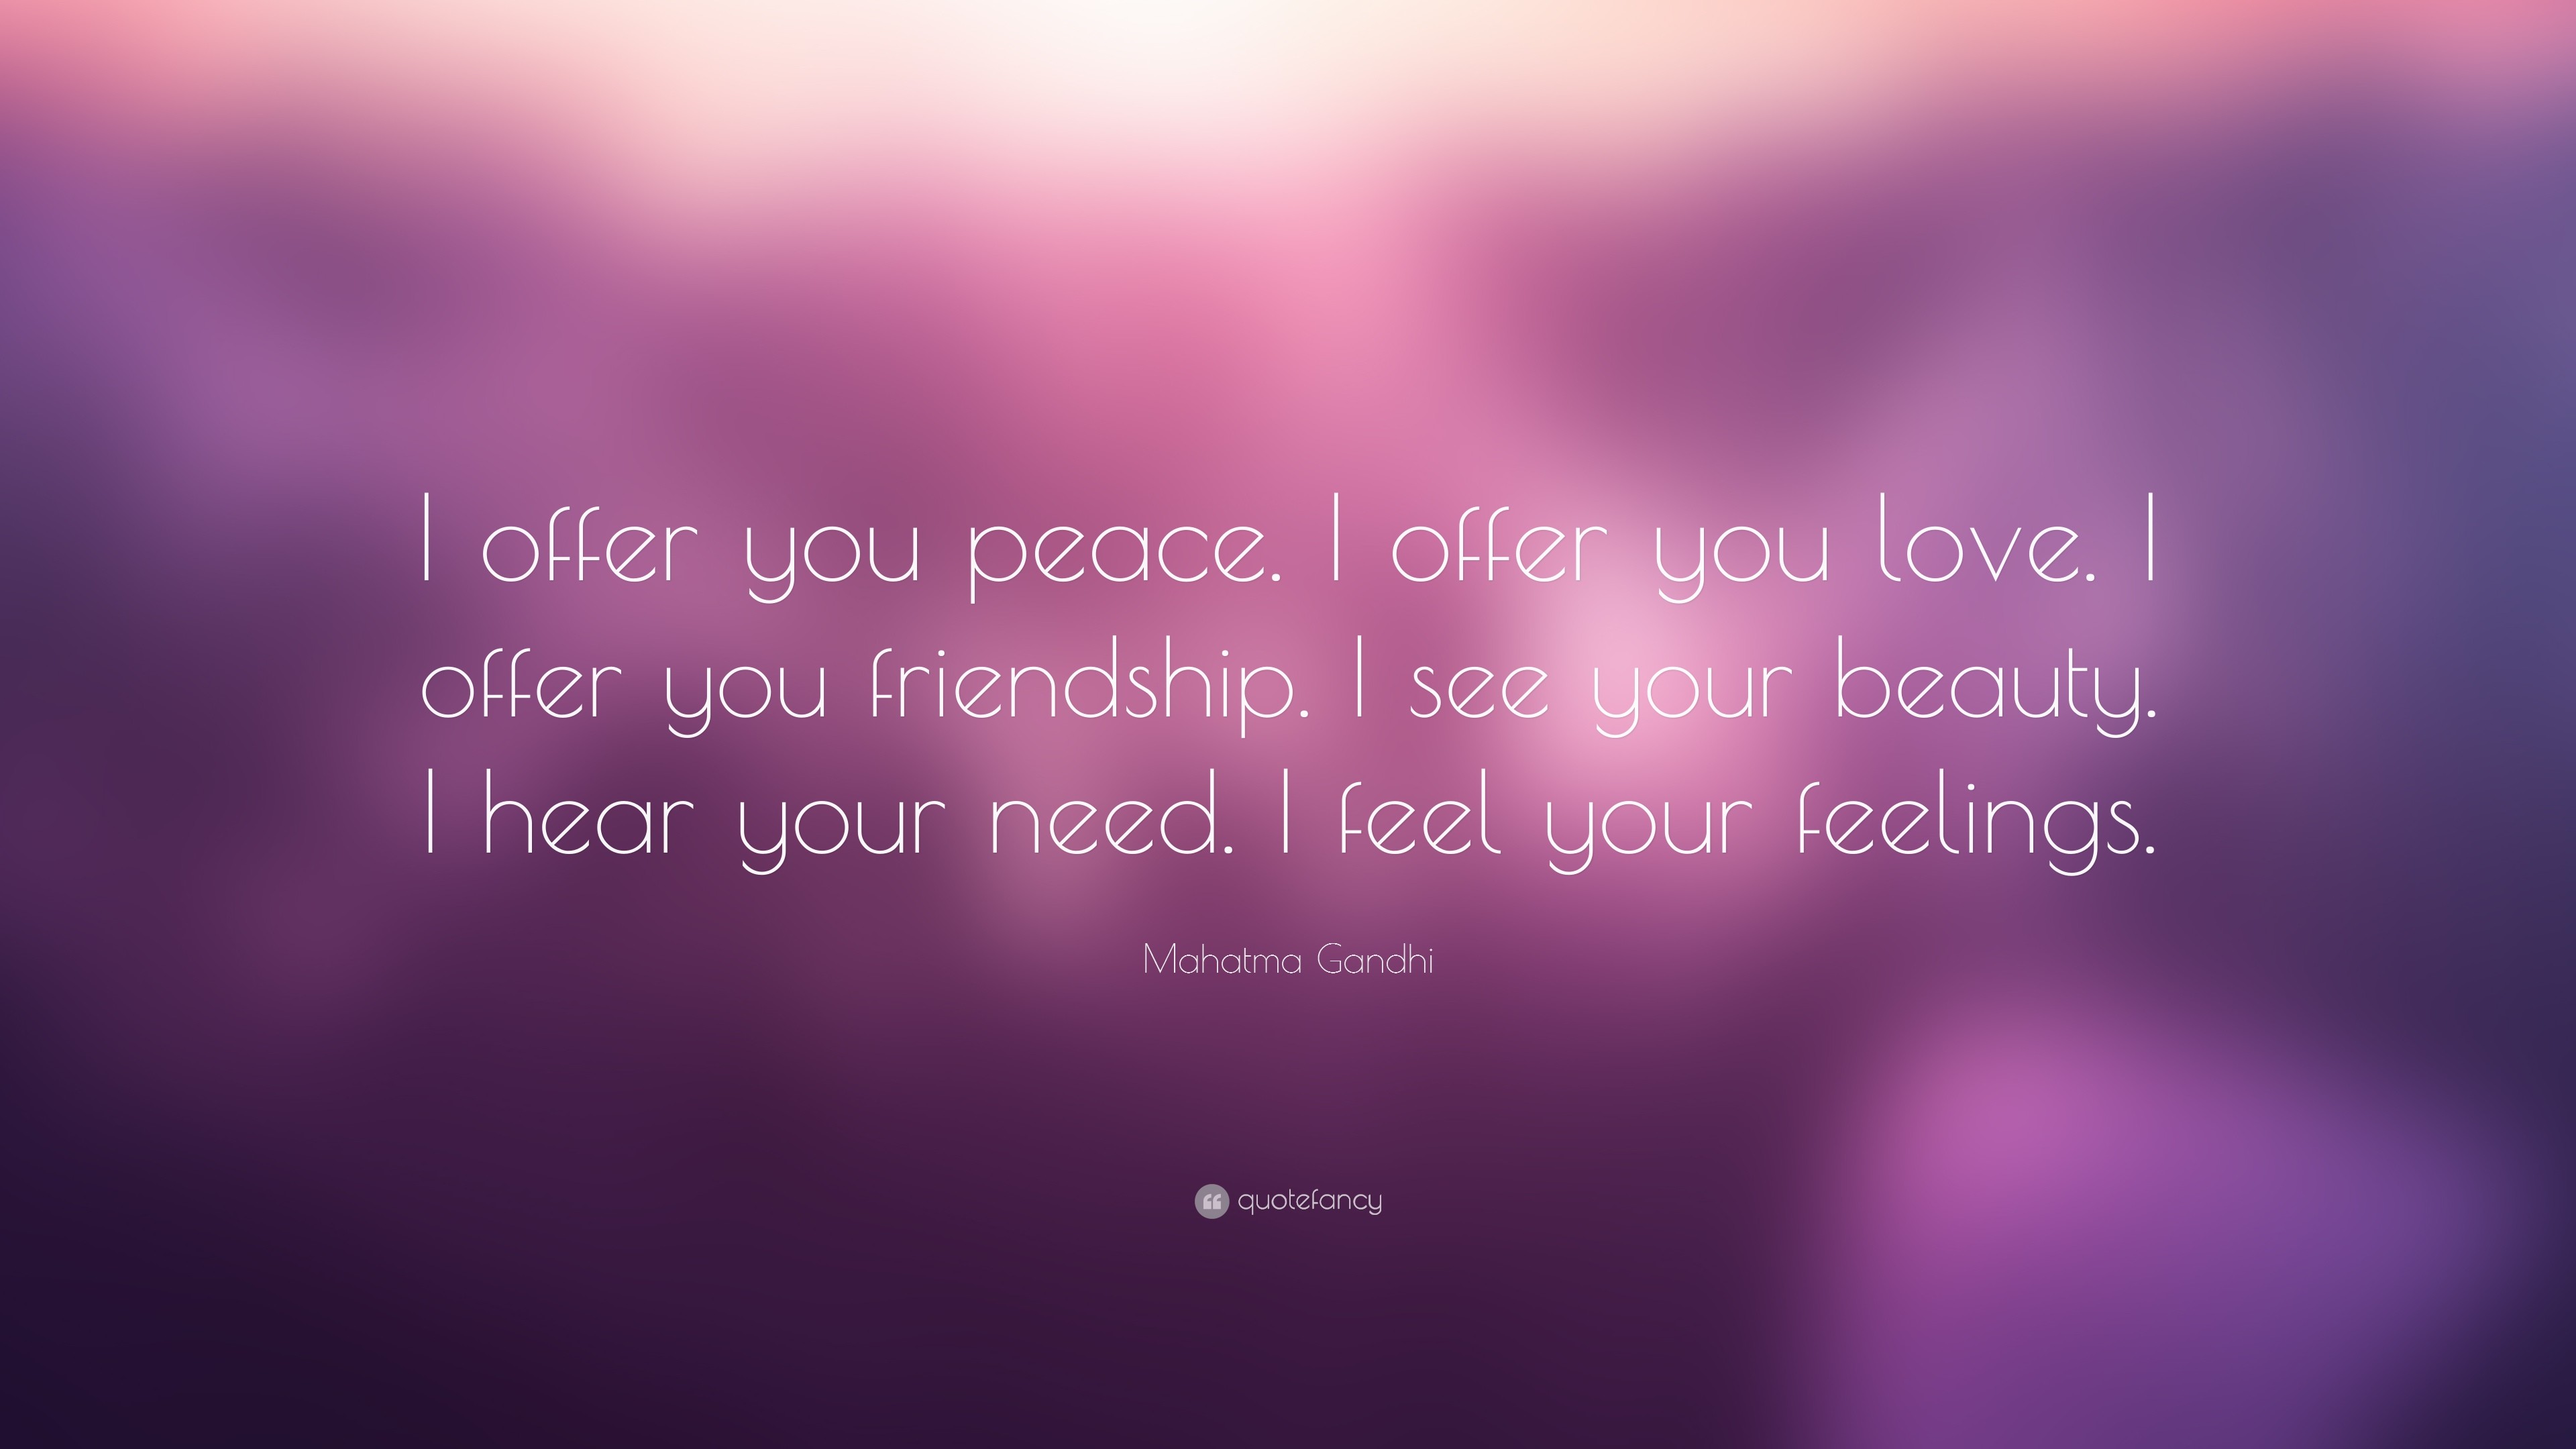 3840x2160 Mahatma Gandhi Quote: “I offer you peace. I offer you love. I